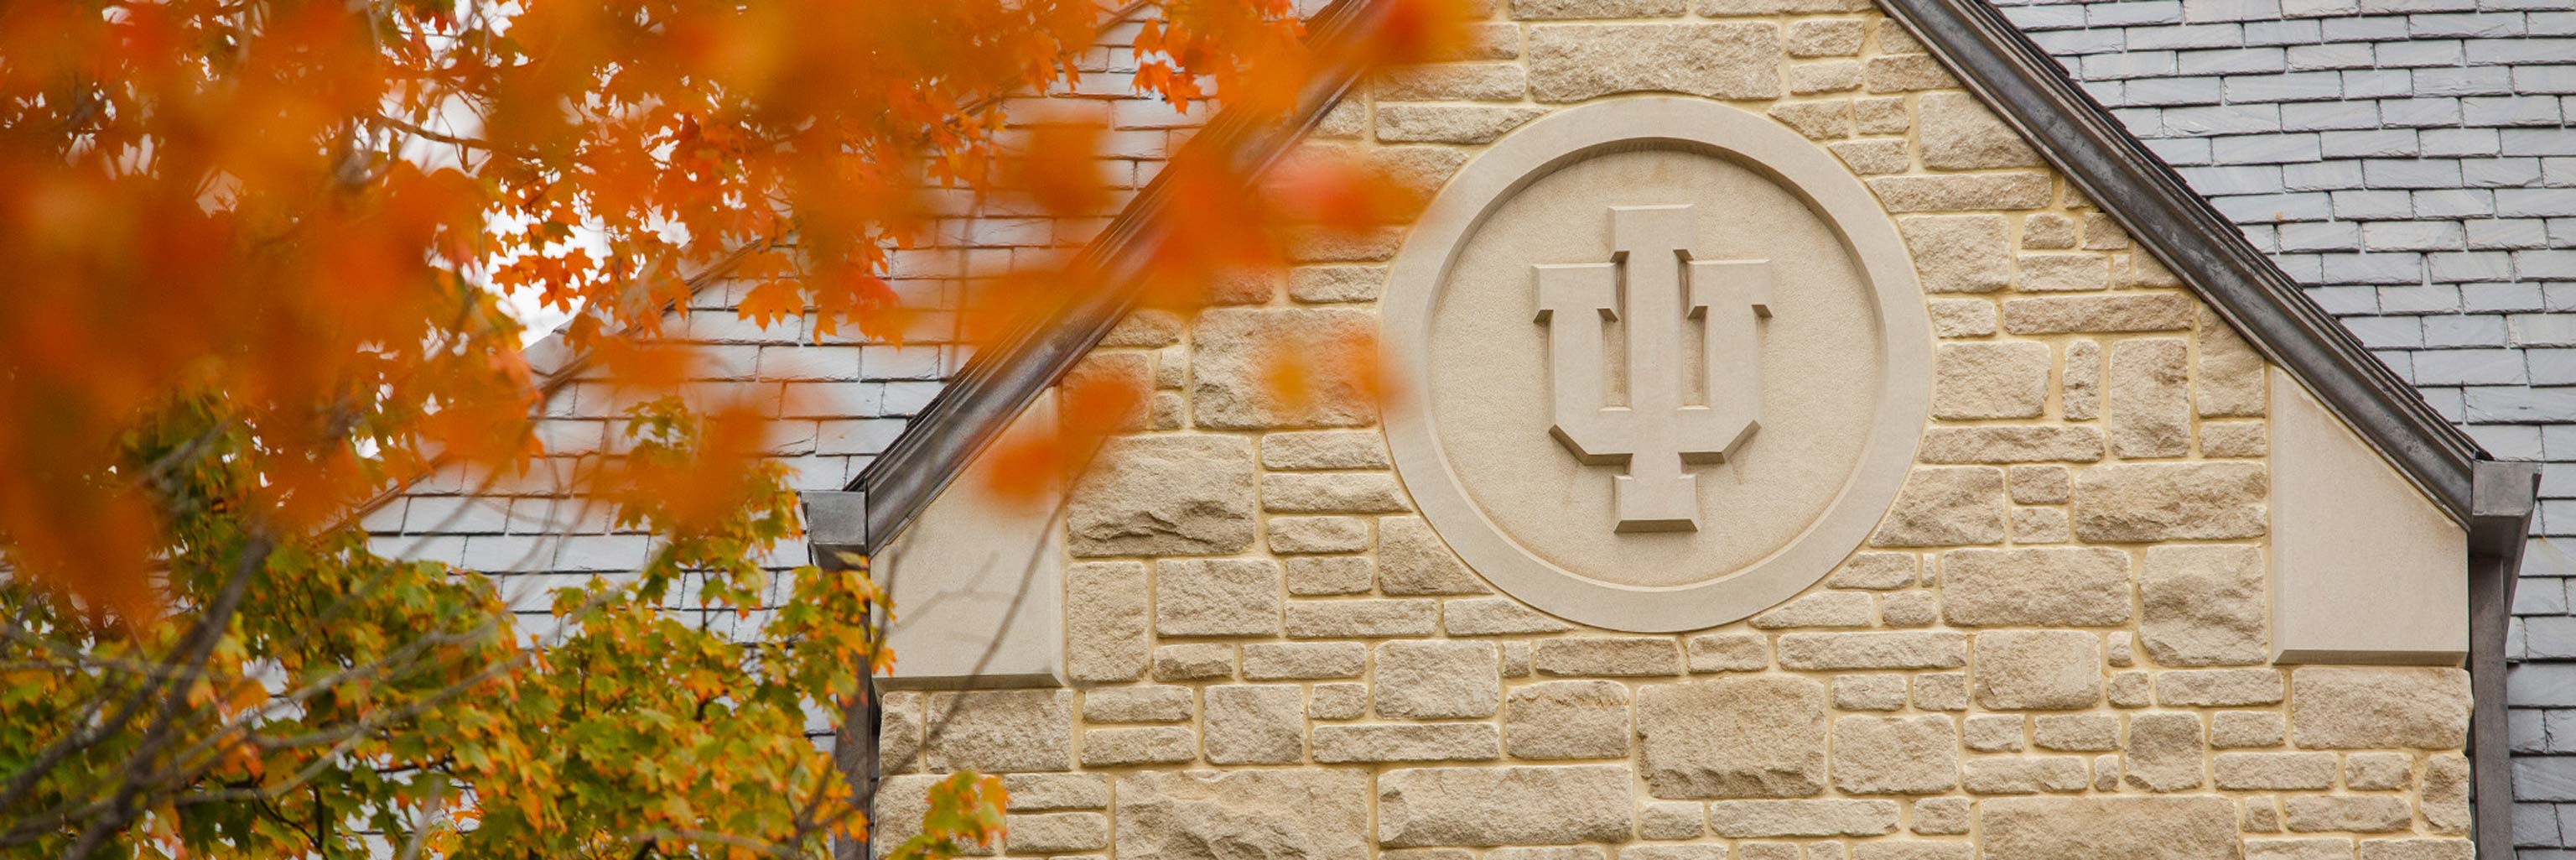 Autumn image of Indiana University logo carved on building